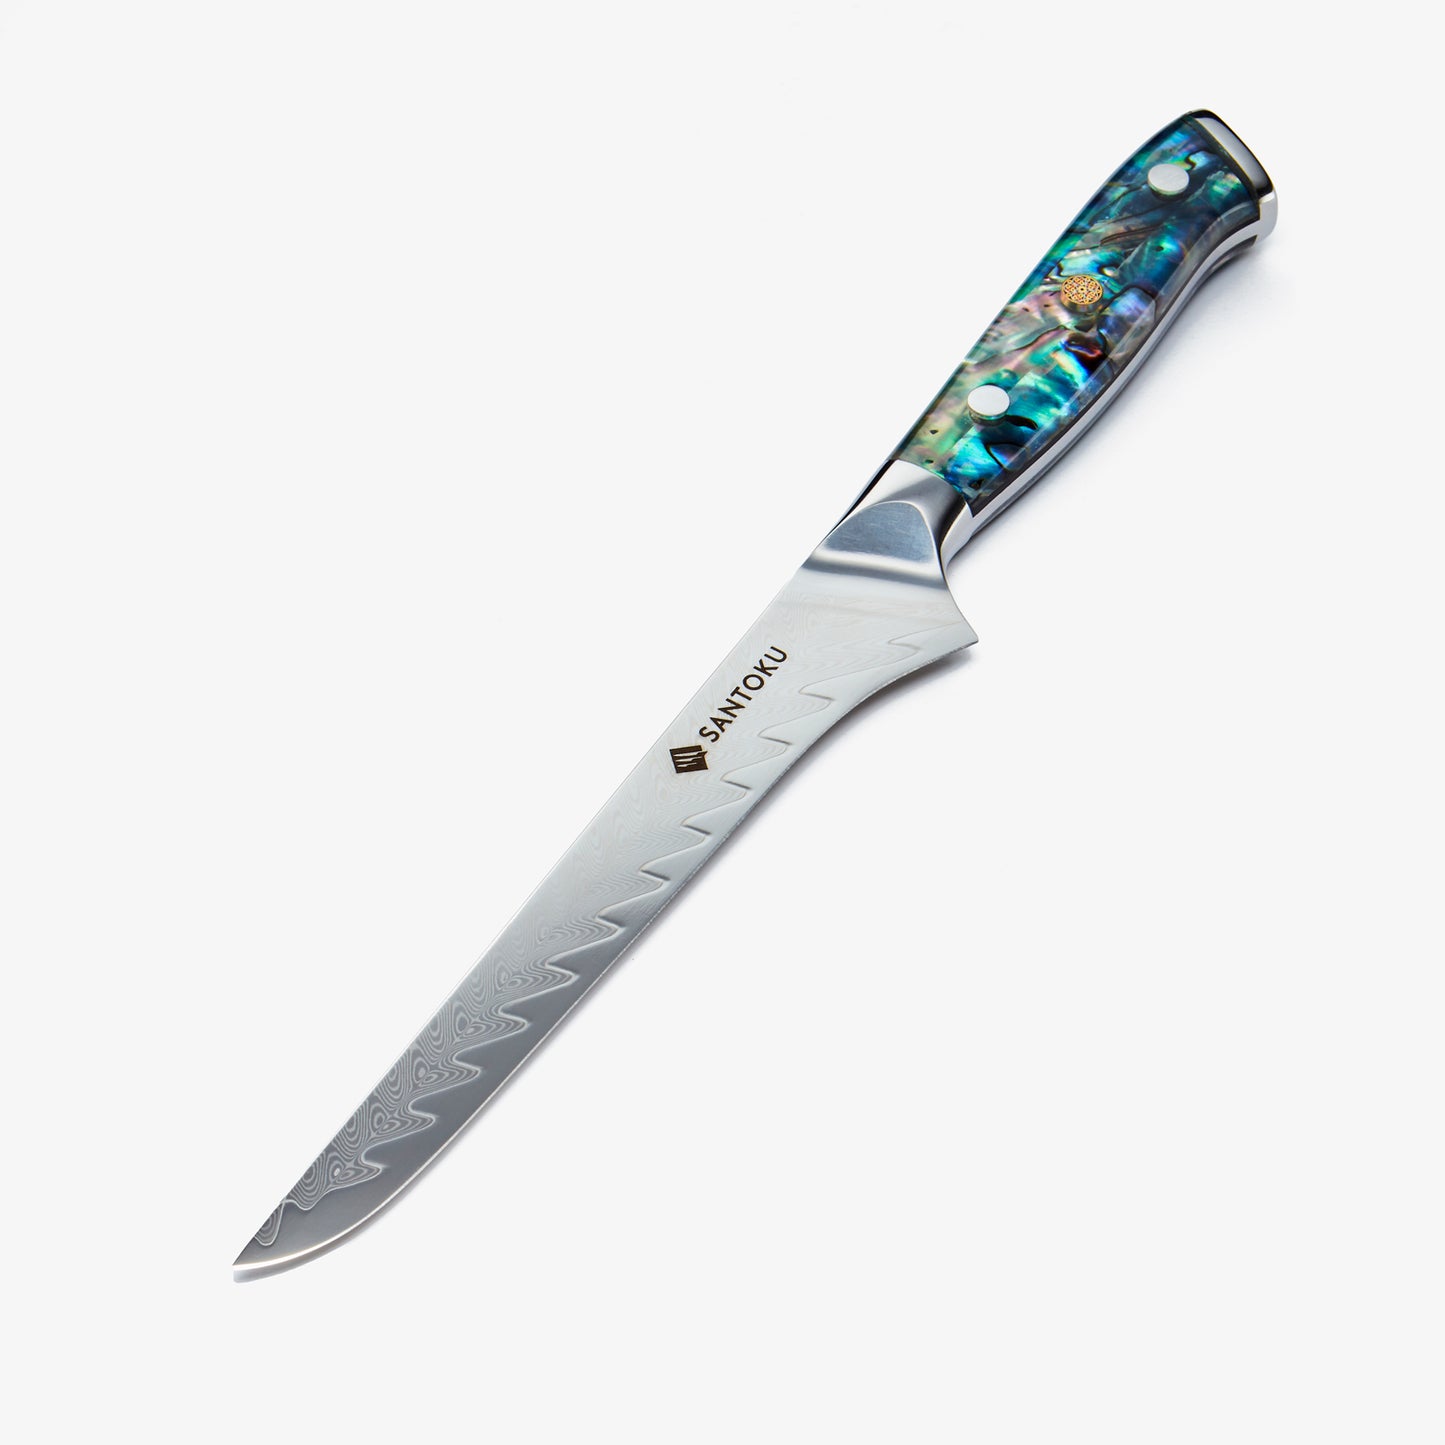 Chikashi (ちかし) 6 -дюймовый нож для боевого ножа